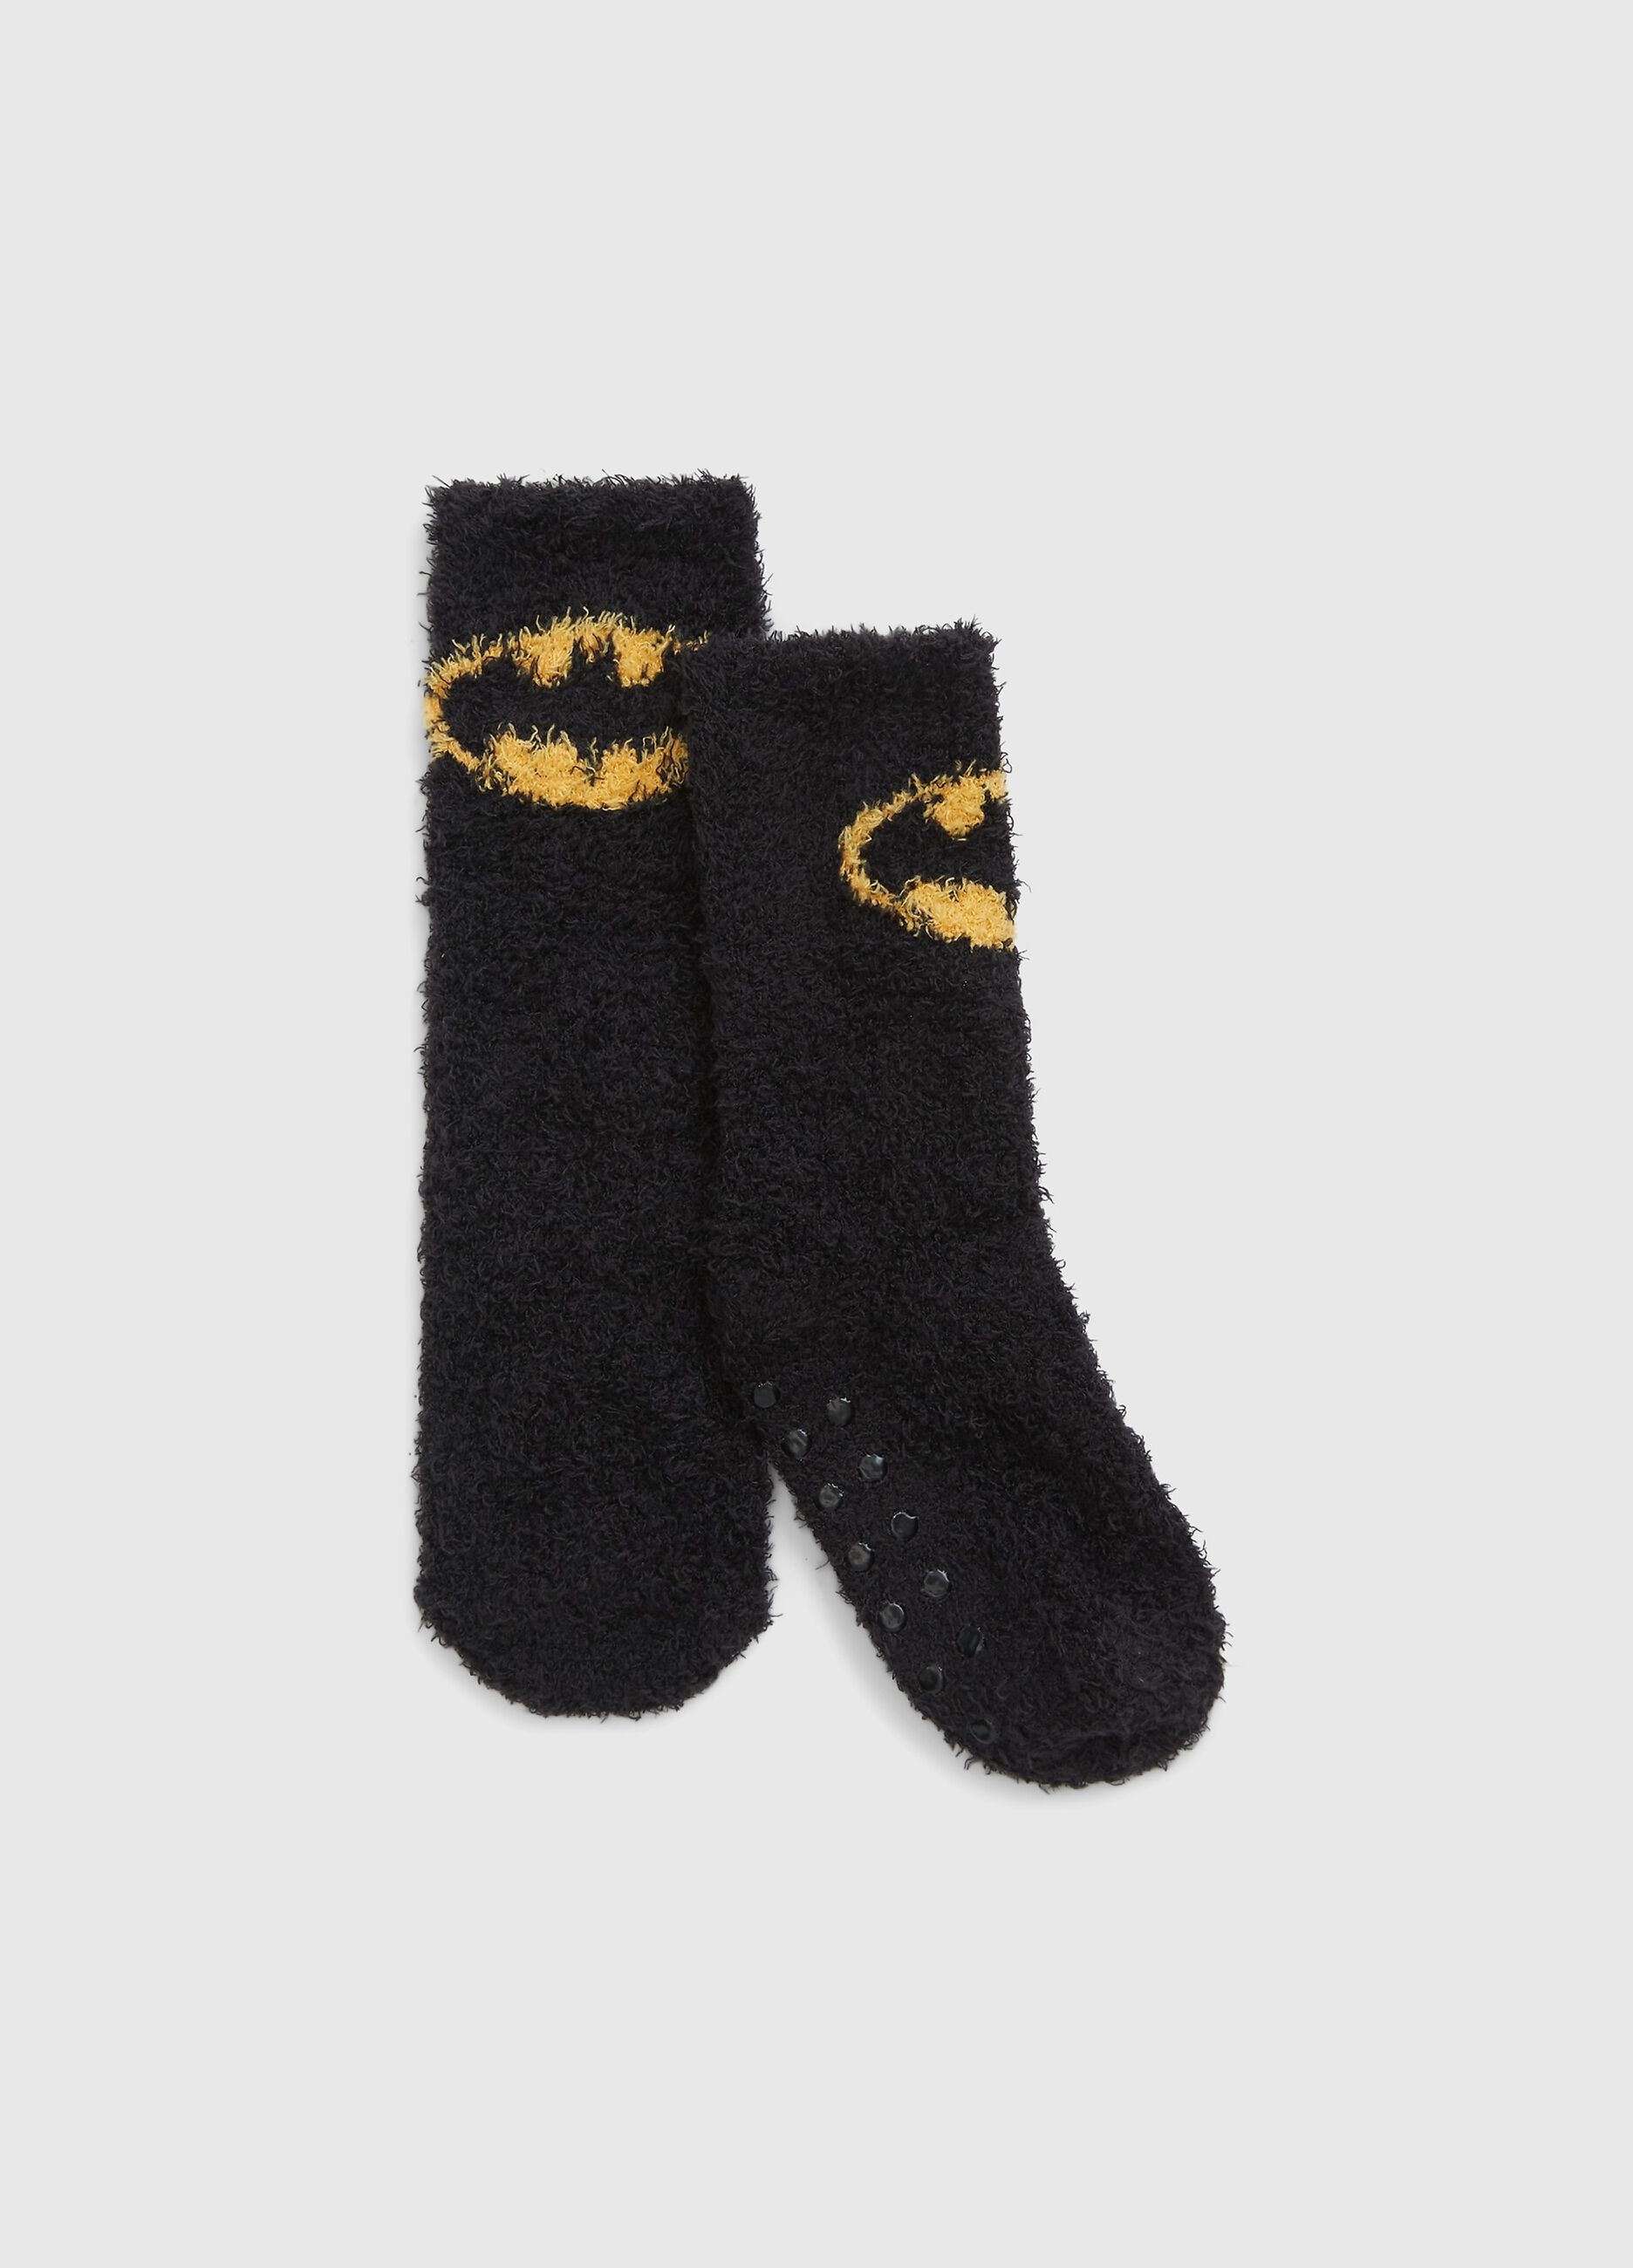 Slipper socks with Warner Bros Batman logo